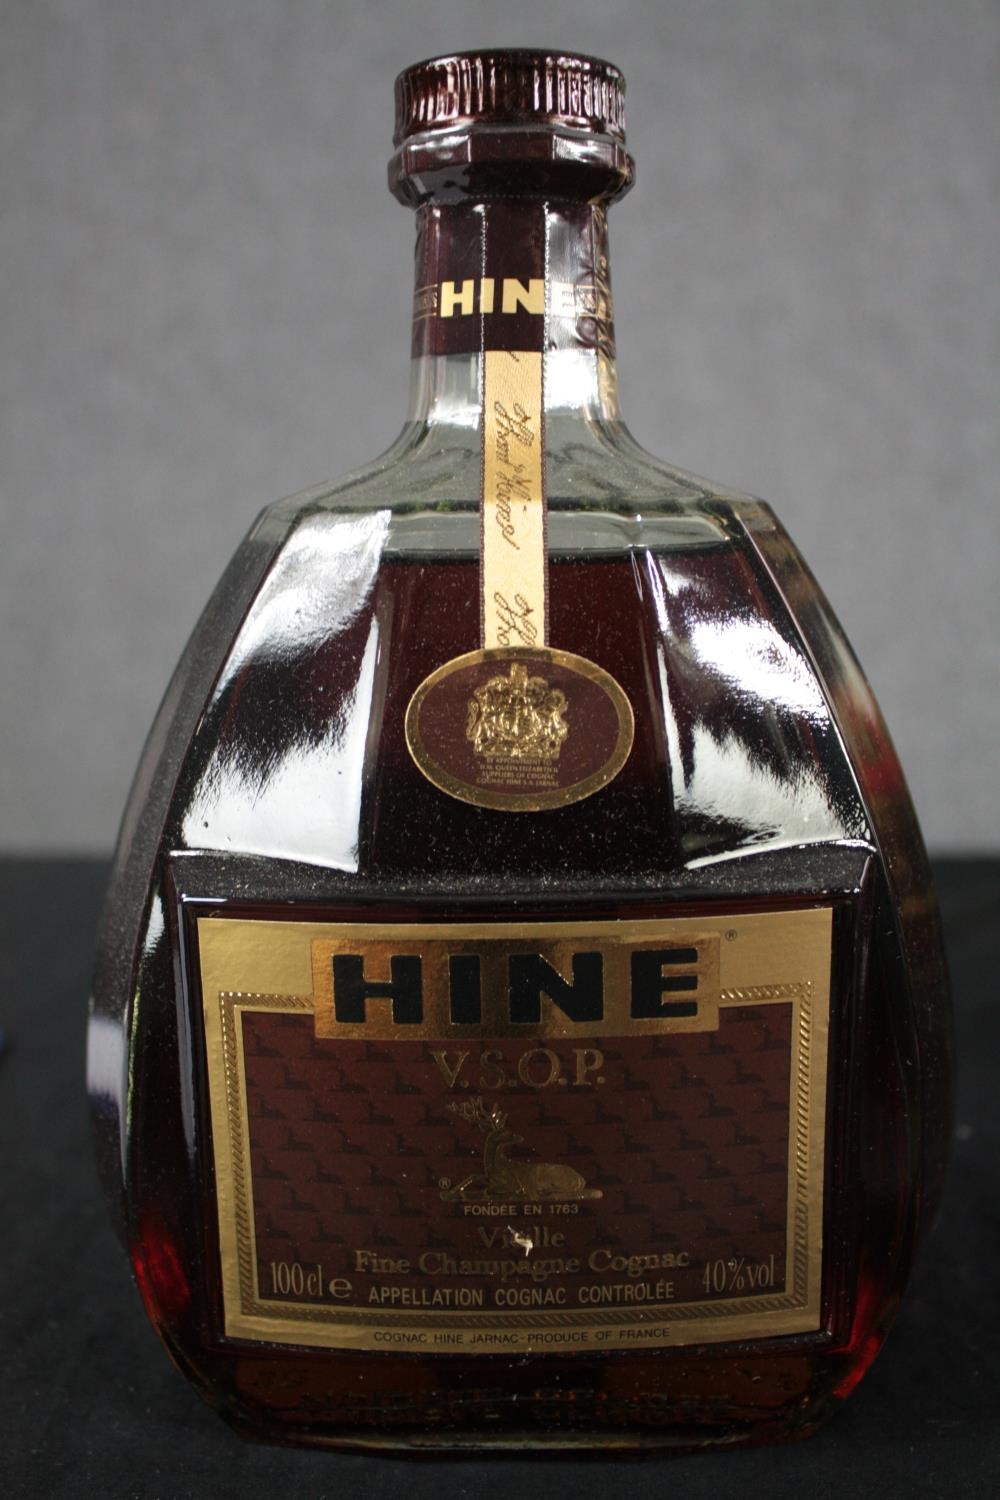 Seven bottles of V.S.O.P Hine cognac. Boxed and unopened one litre bottles. - Image 2 of 2